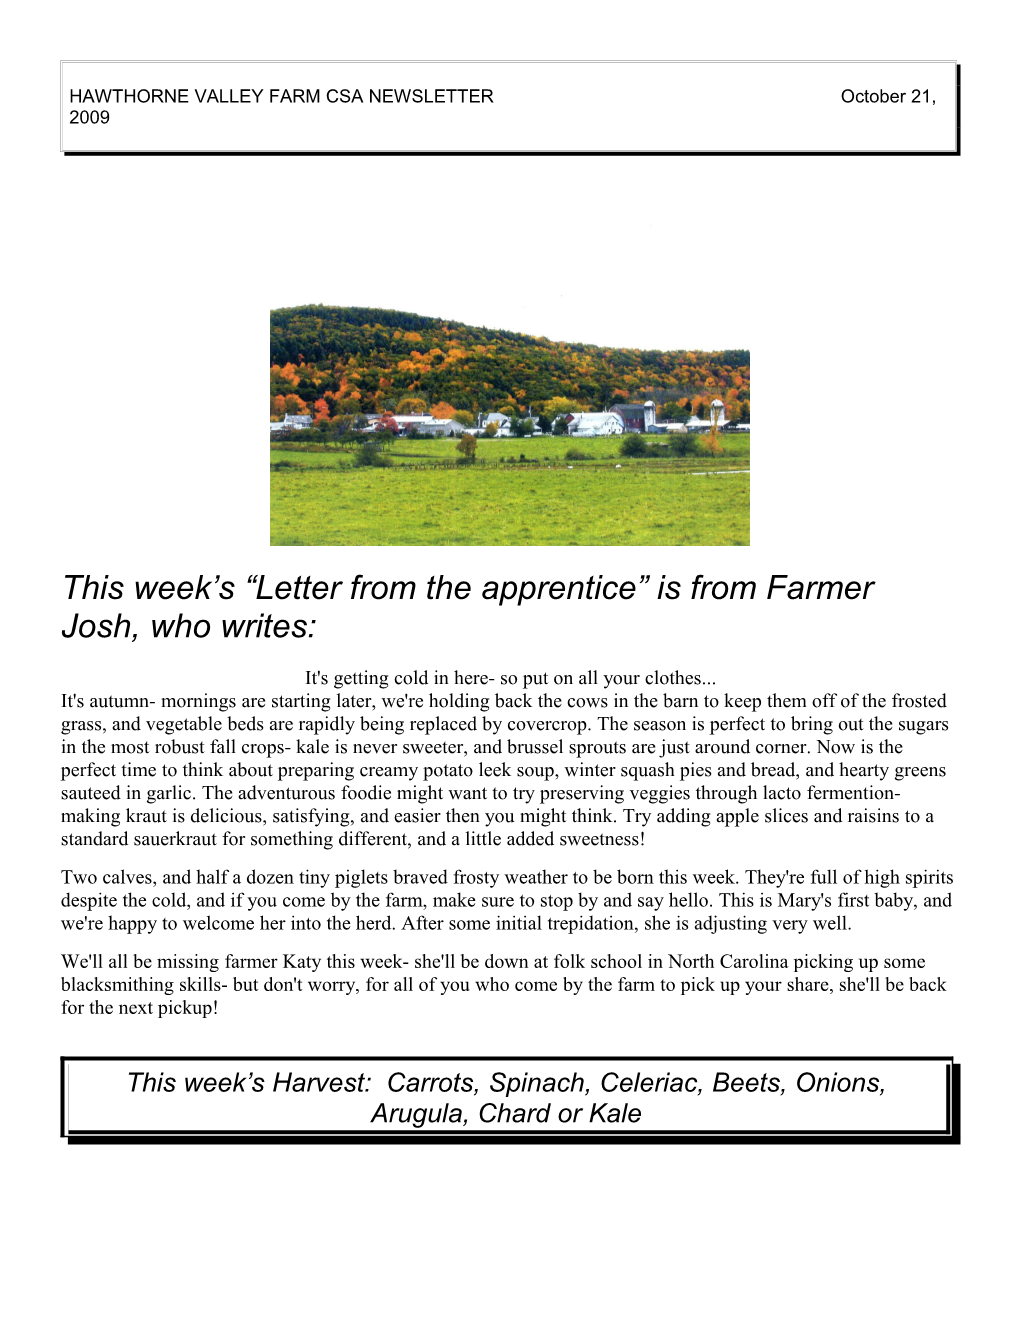 Hawthorne Valley Farm Csa Newsletter